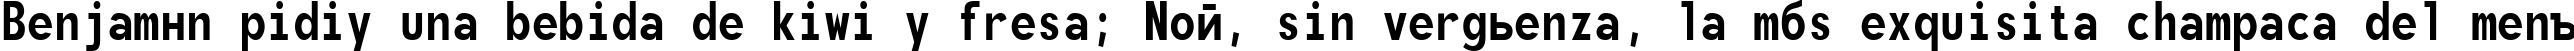 Пример написания шрифтом Monofonto текста на испанском